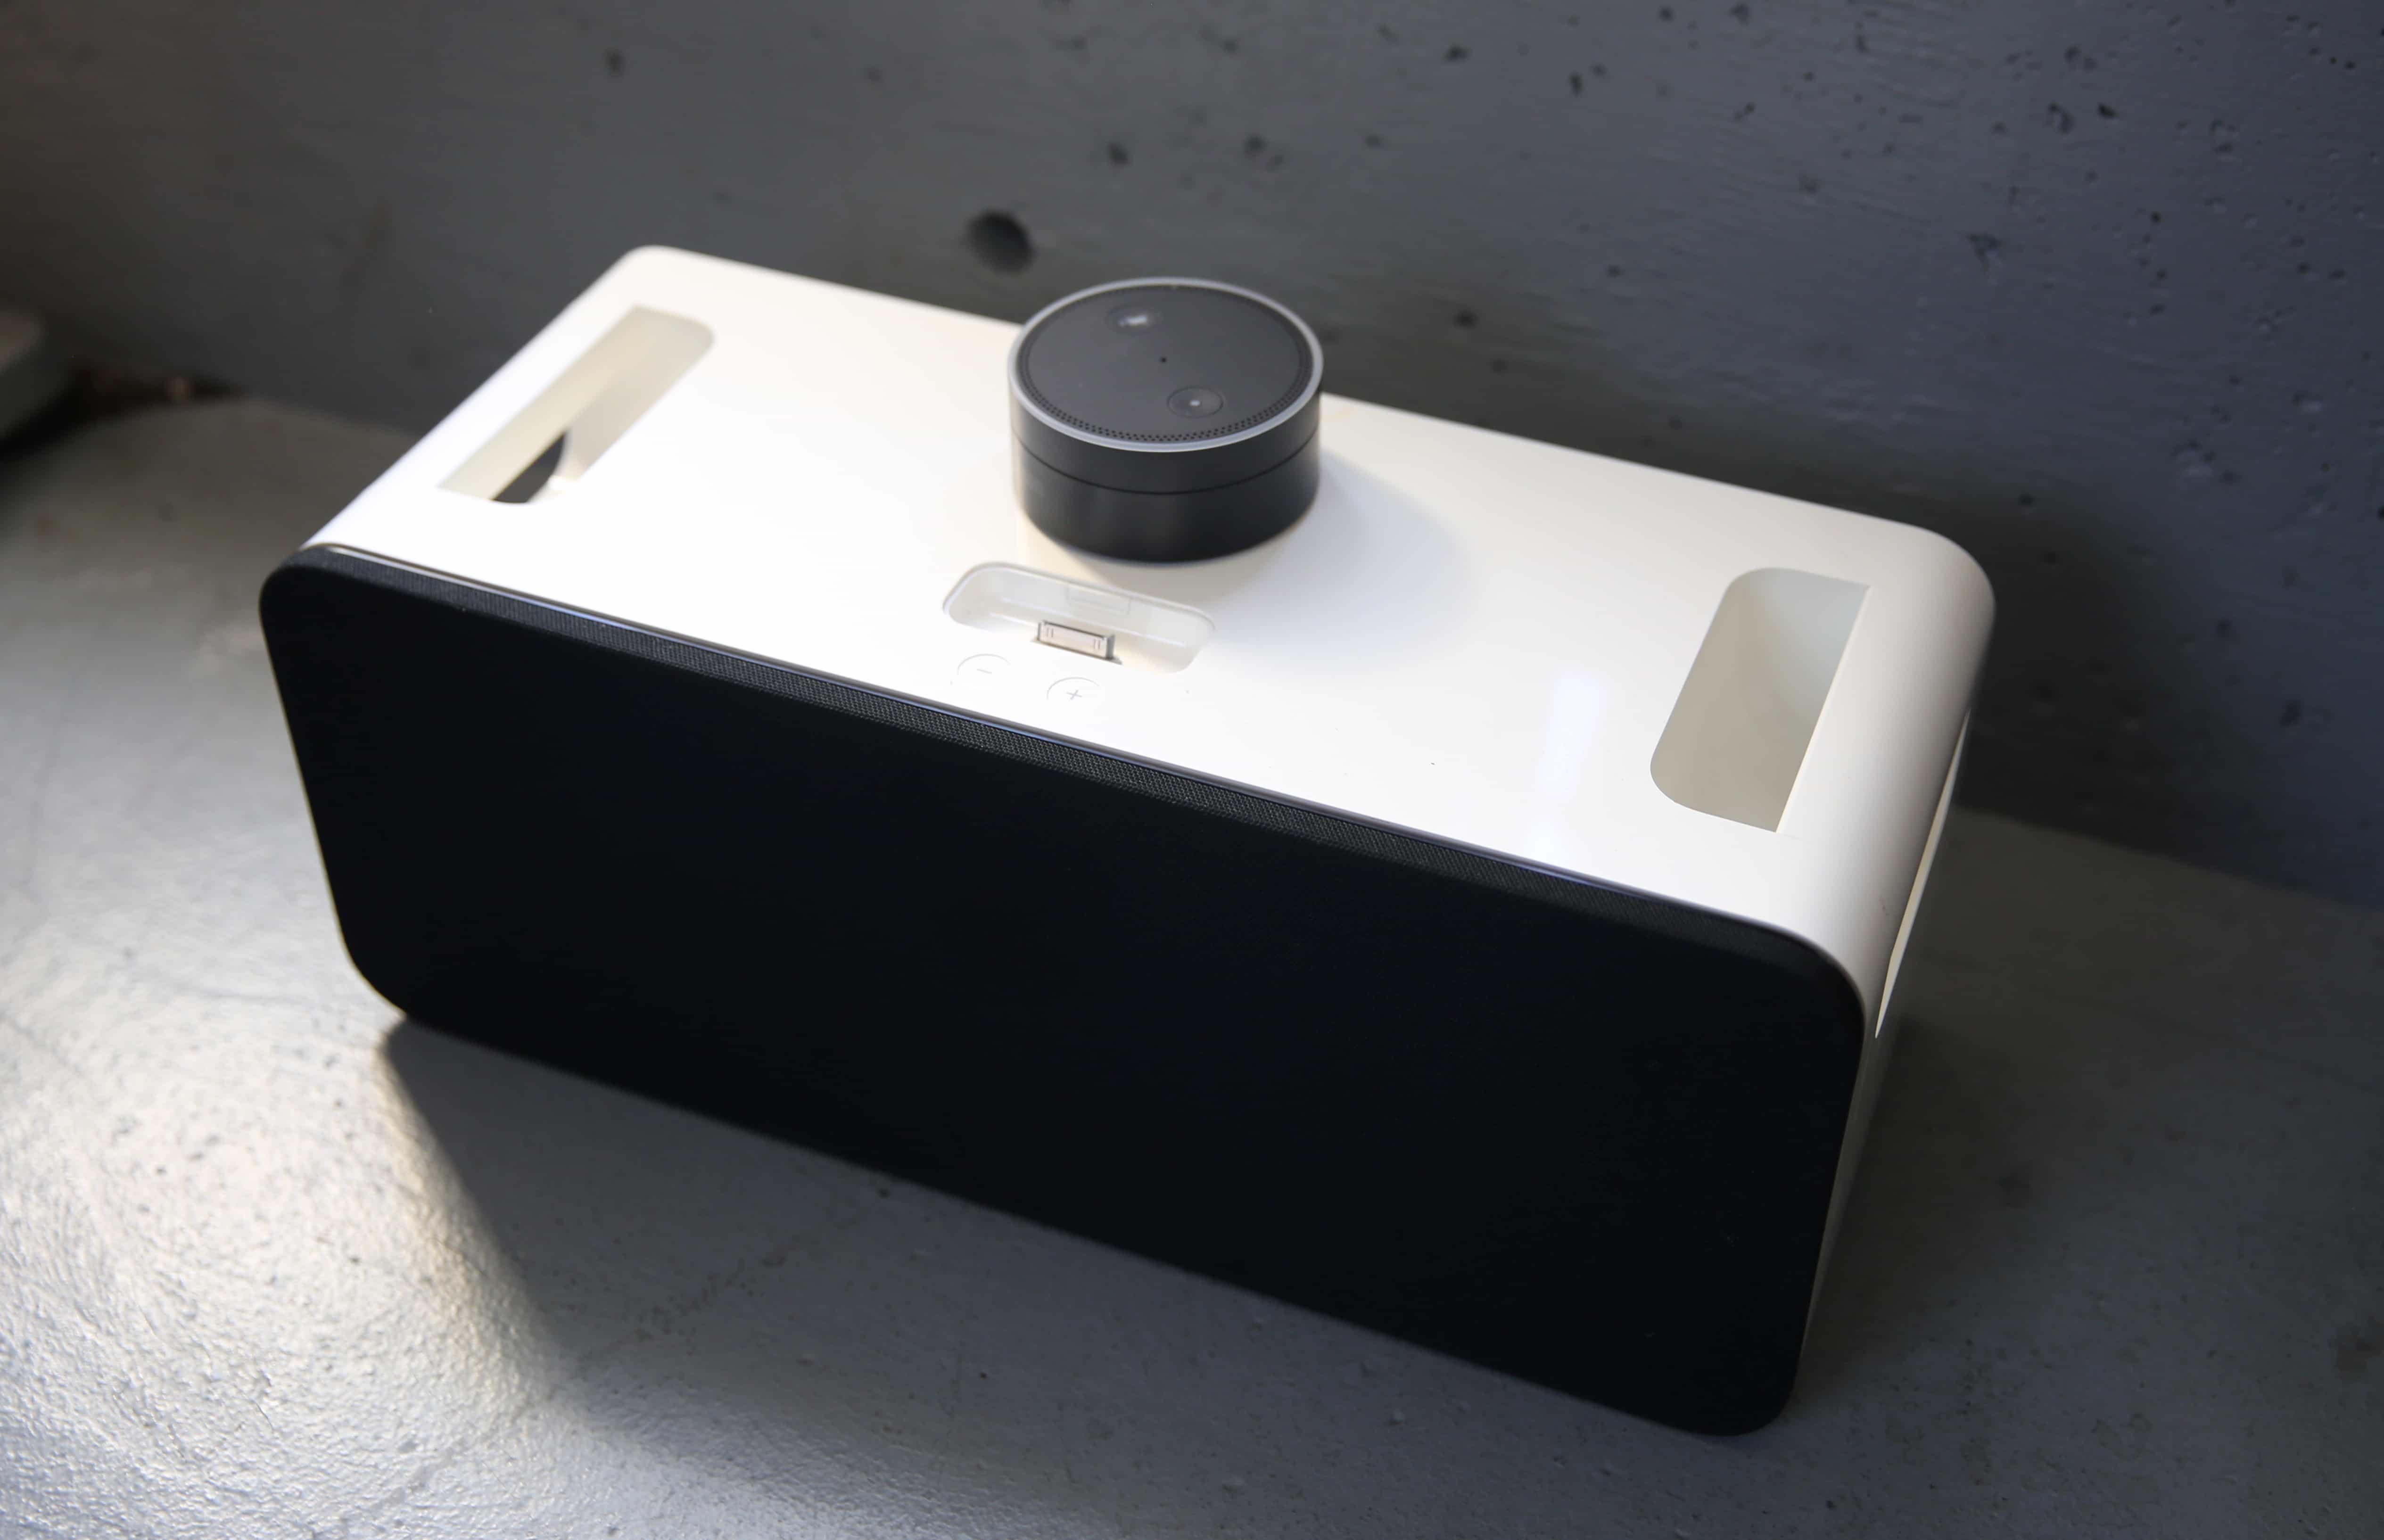 iPod Hi-Fi with Amazon Alexa Dot